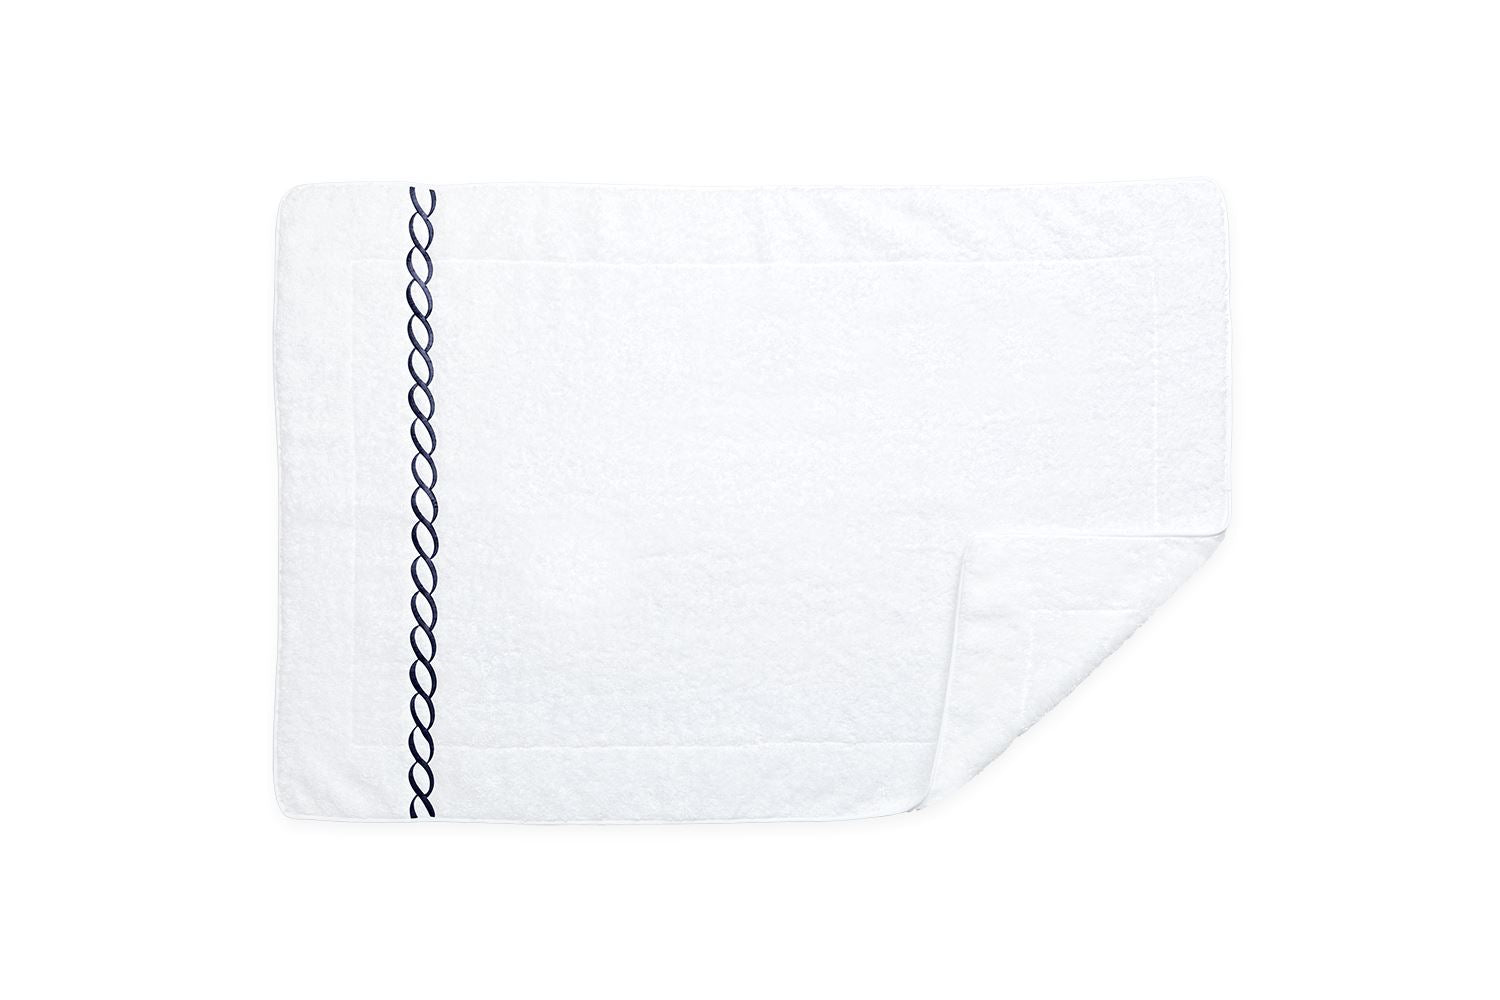 Matouk Classic Chain Bath Towel (Navy)